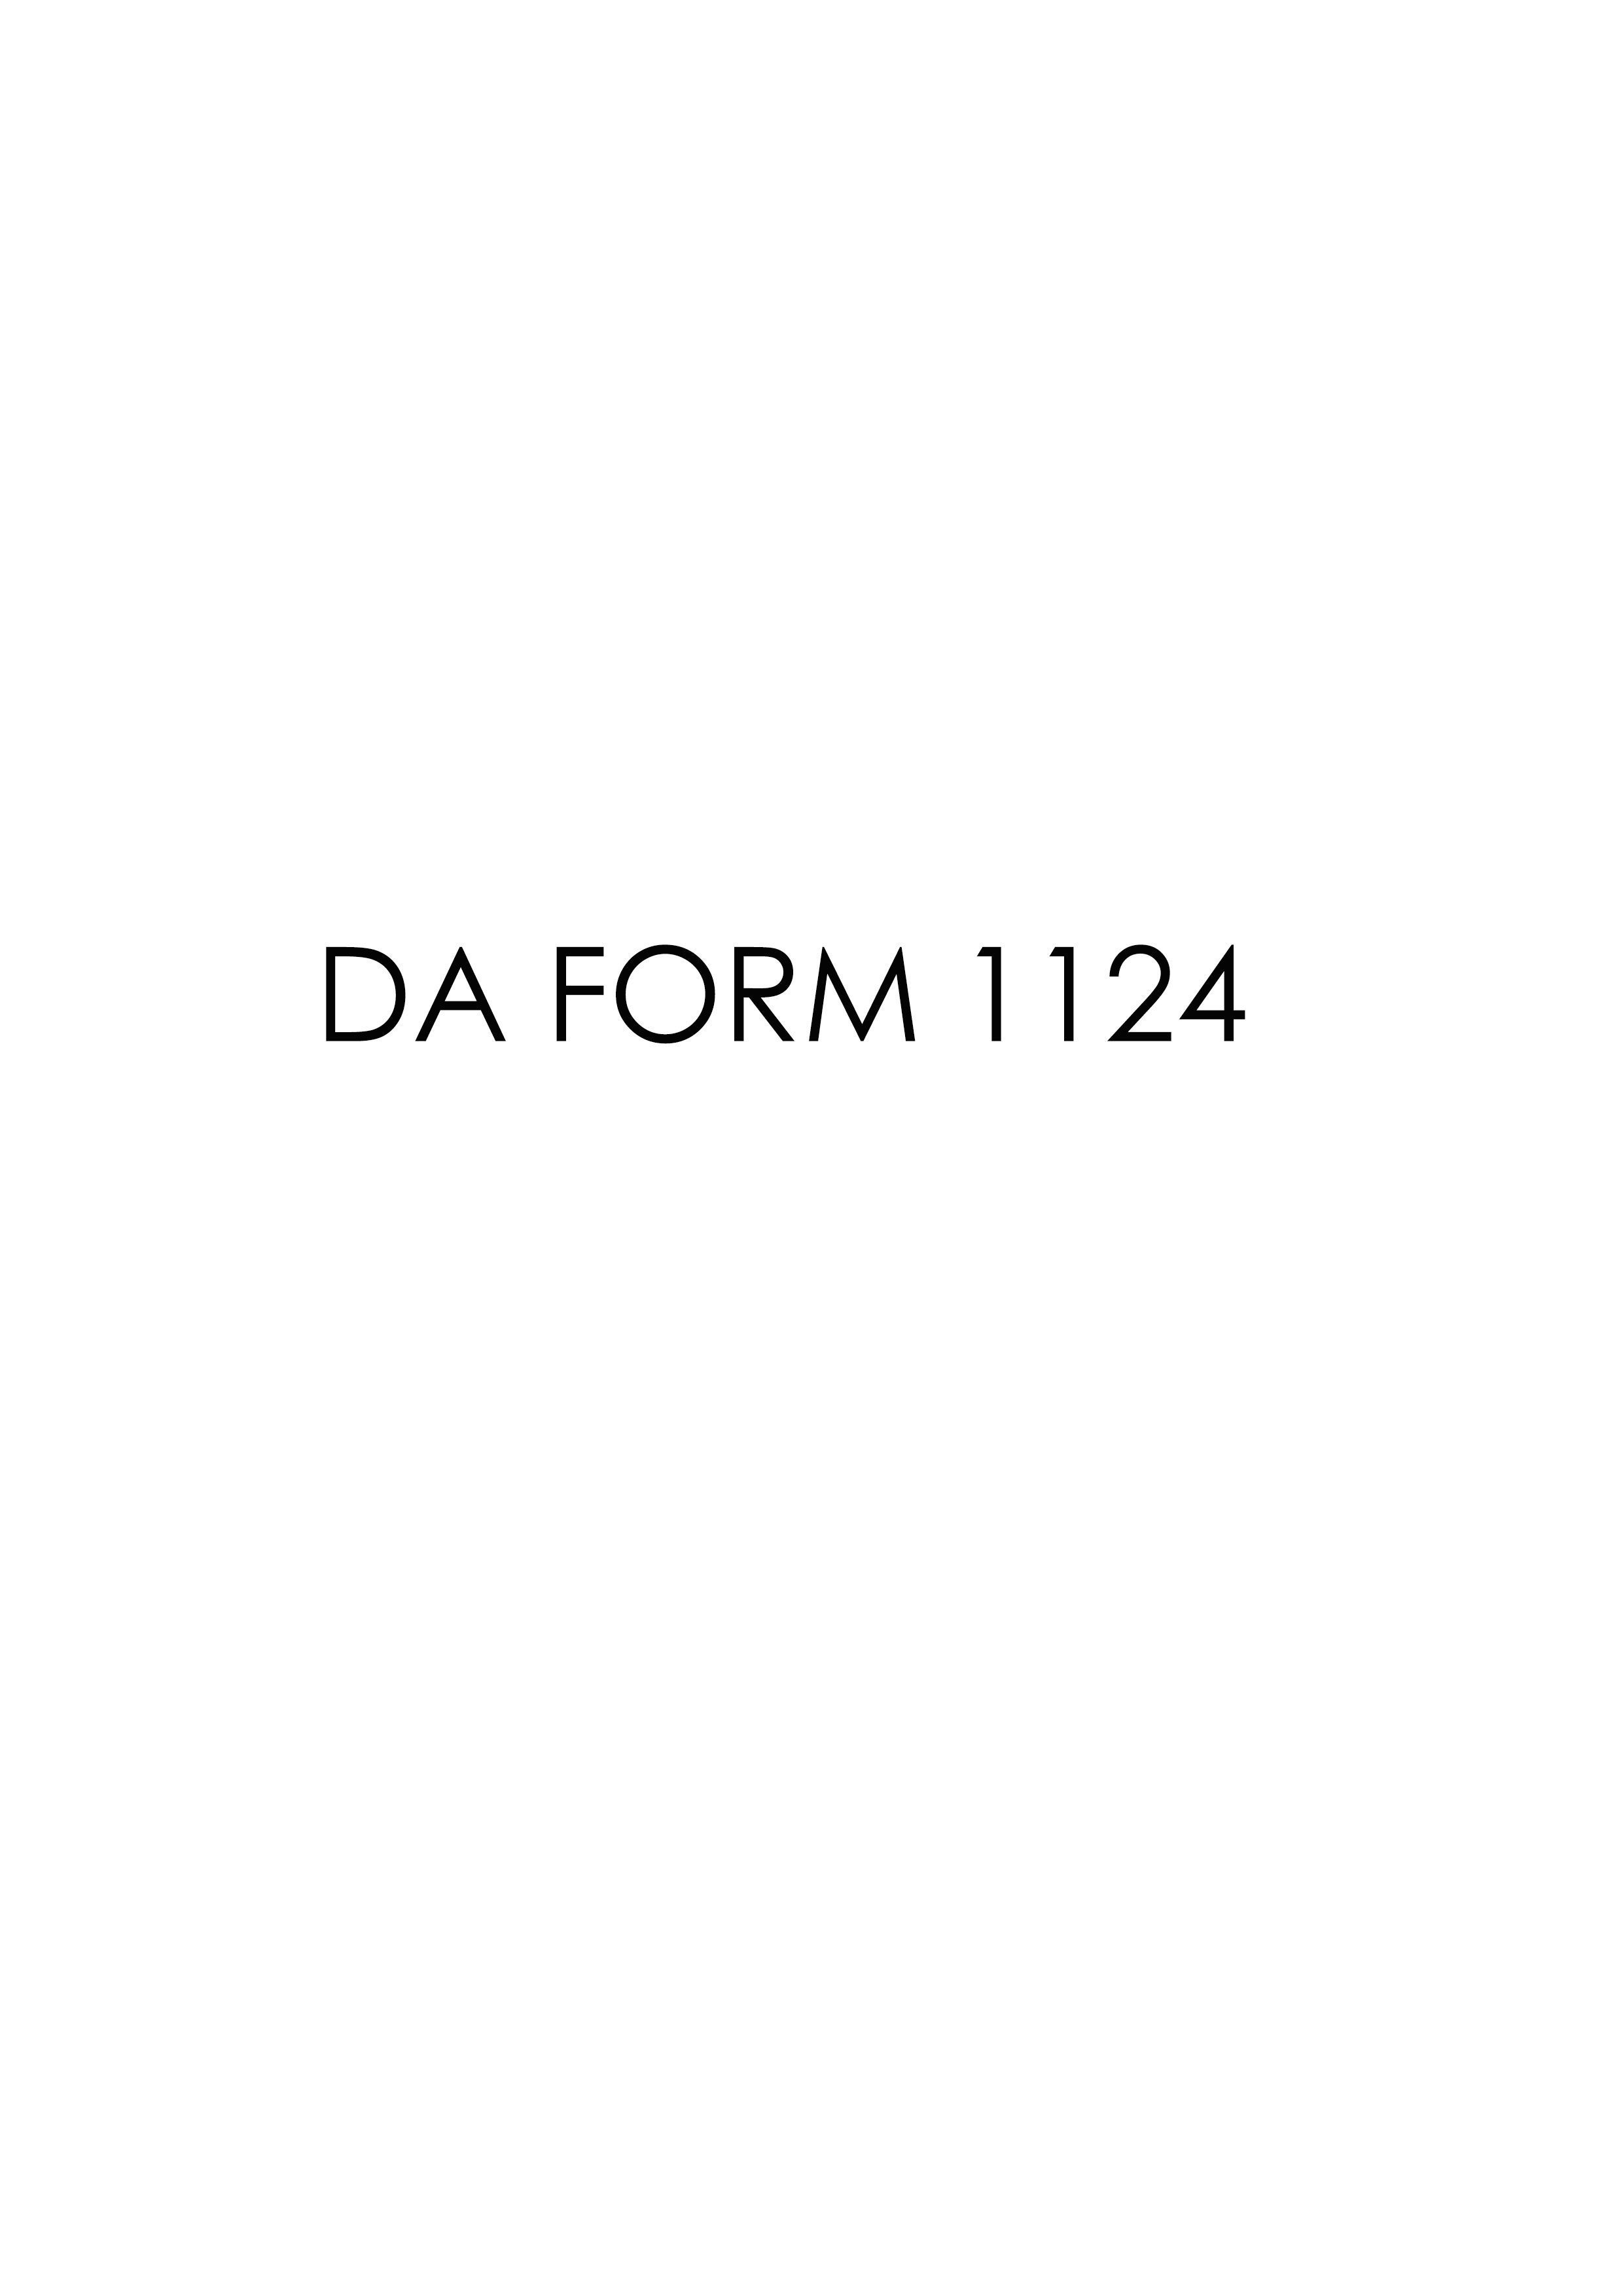 Download da 1124 Form